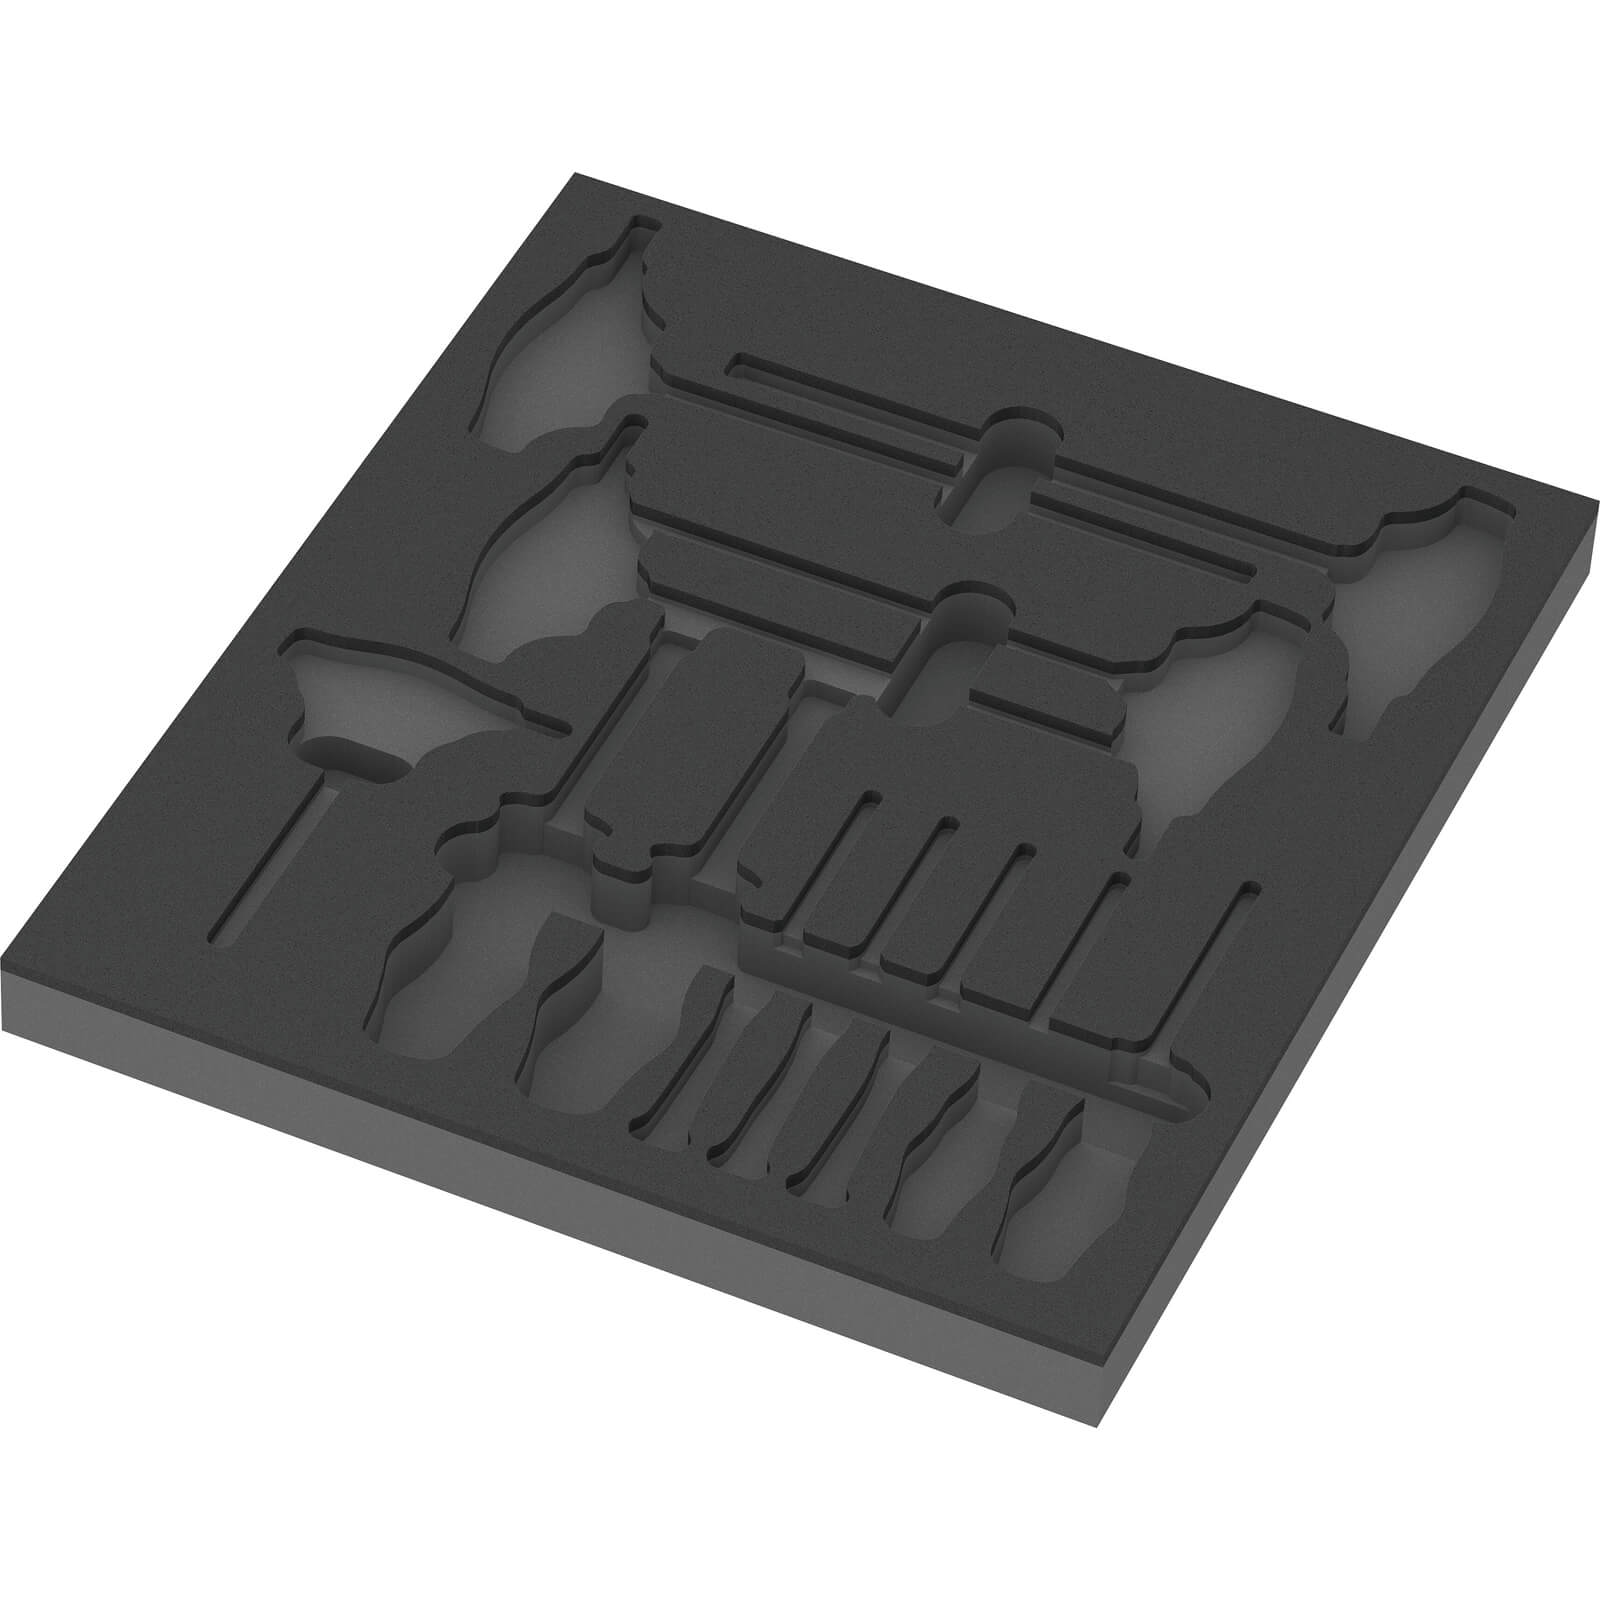 Image of Wera Empty Foam Insert Tray for 9713 Hexagon Screwdriver Set